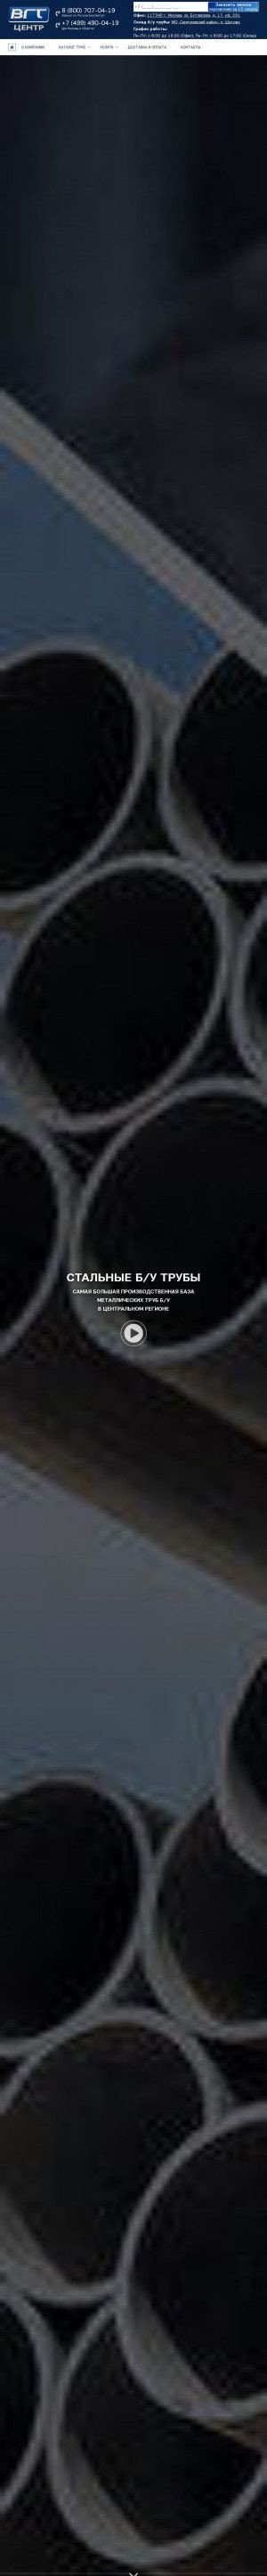 Предпросмотр для www.vgt-centr.ru — ВГТ-центр 